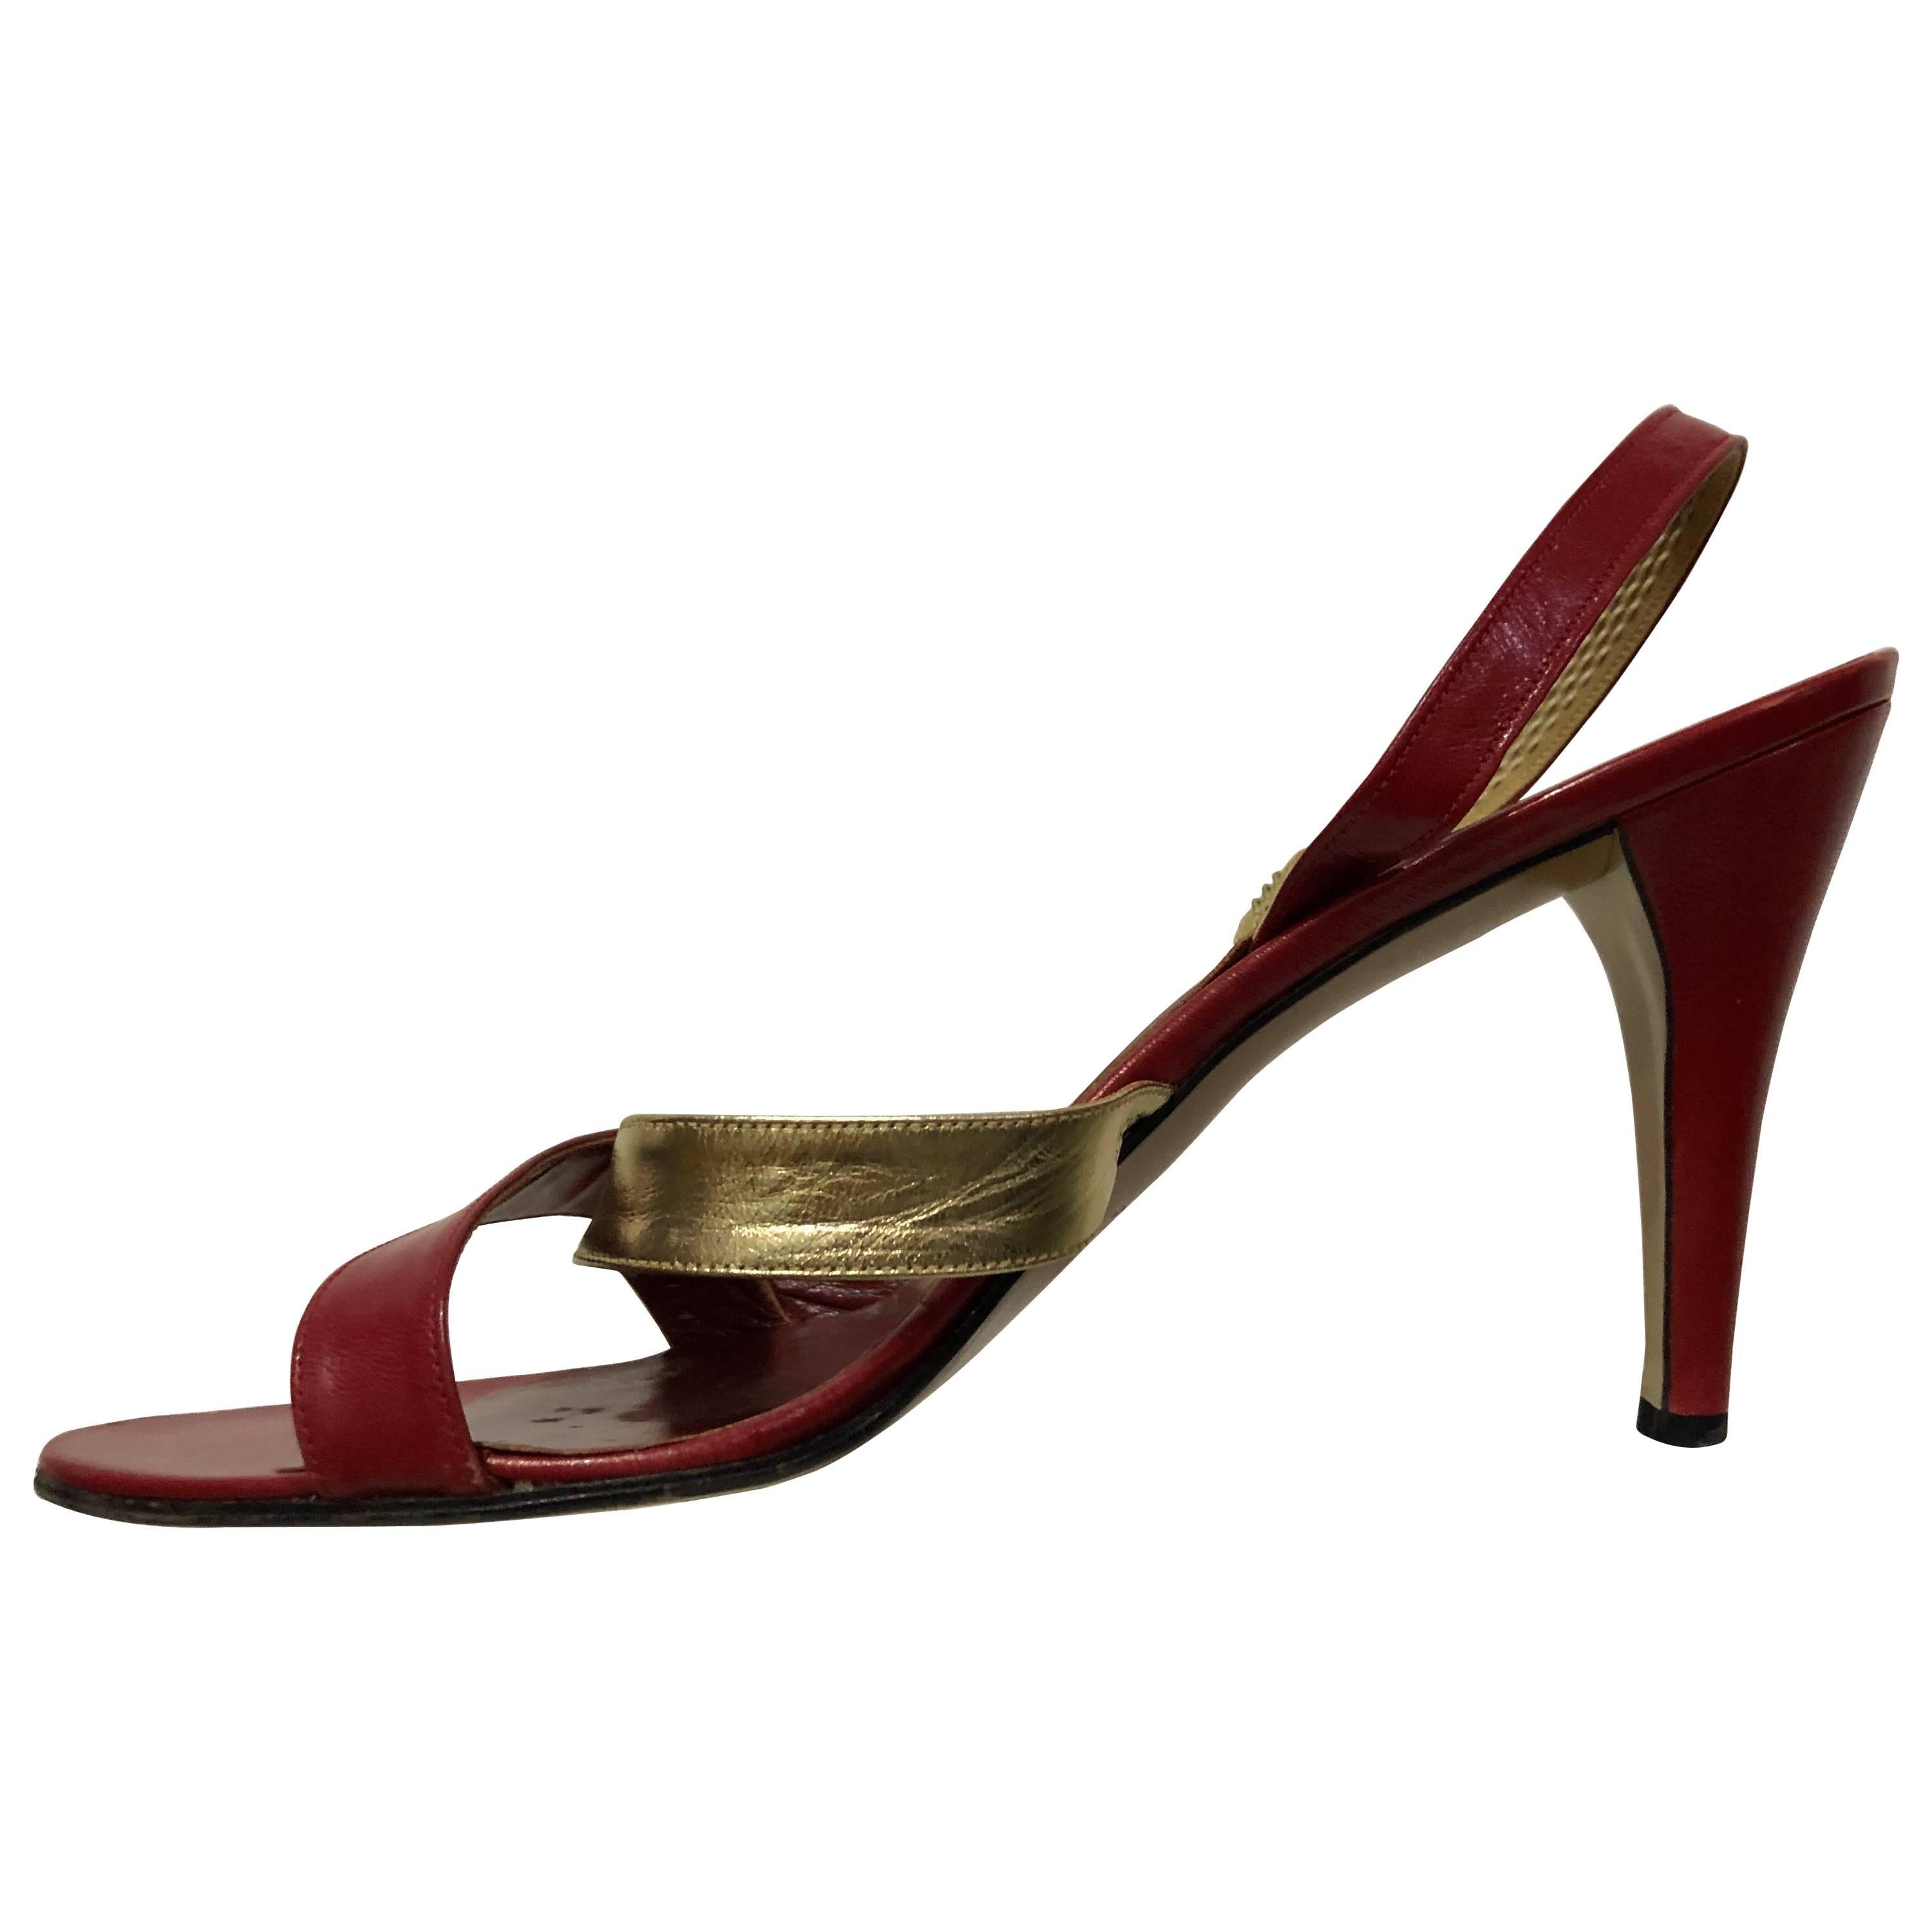 1970s Yves Saint Laurent Gold & Red Leather High Heel Sling-Back Sandals